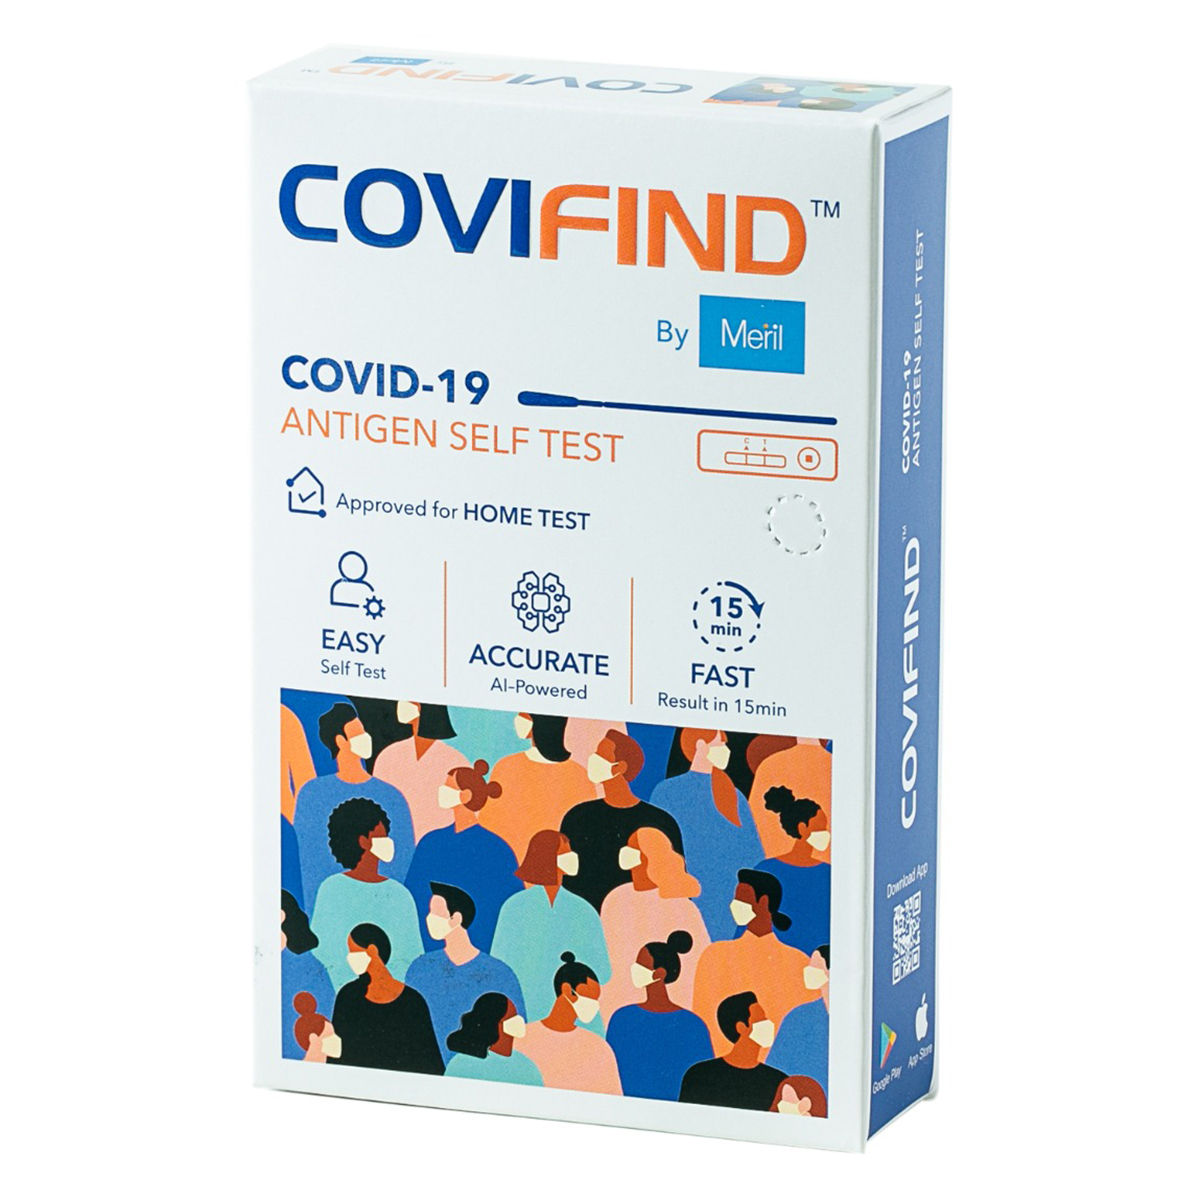 Buy COVIFIND Covid-19 Antigen Self Test Kit, 1 Count Online